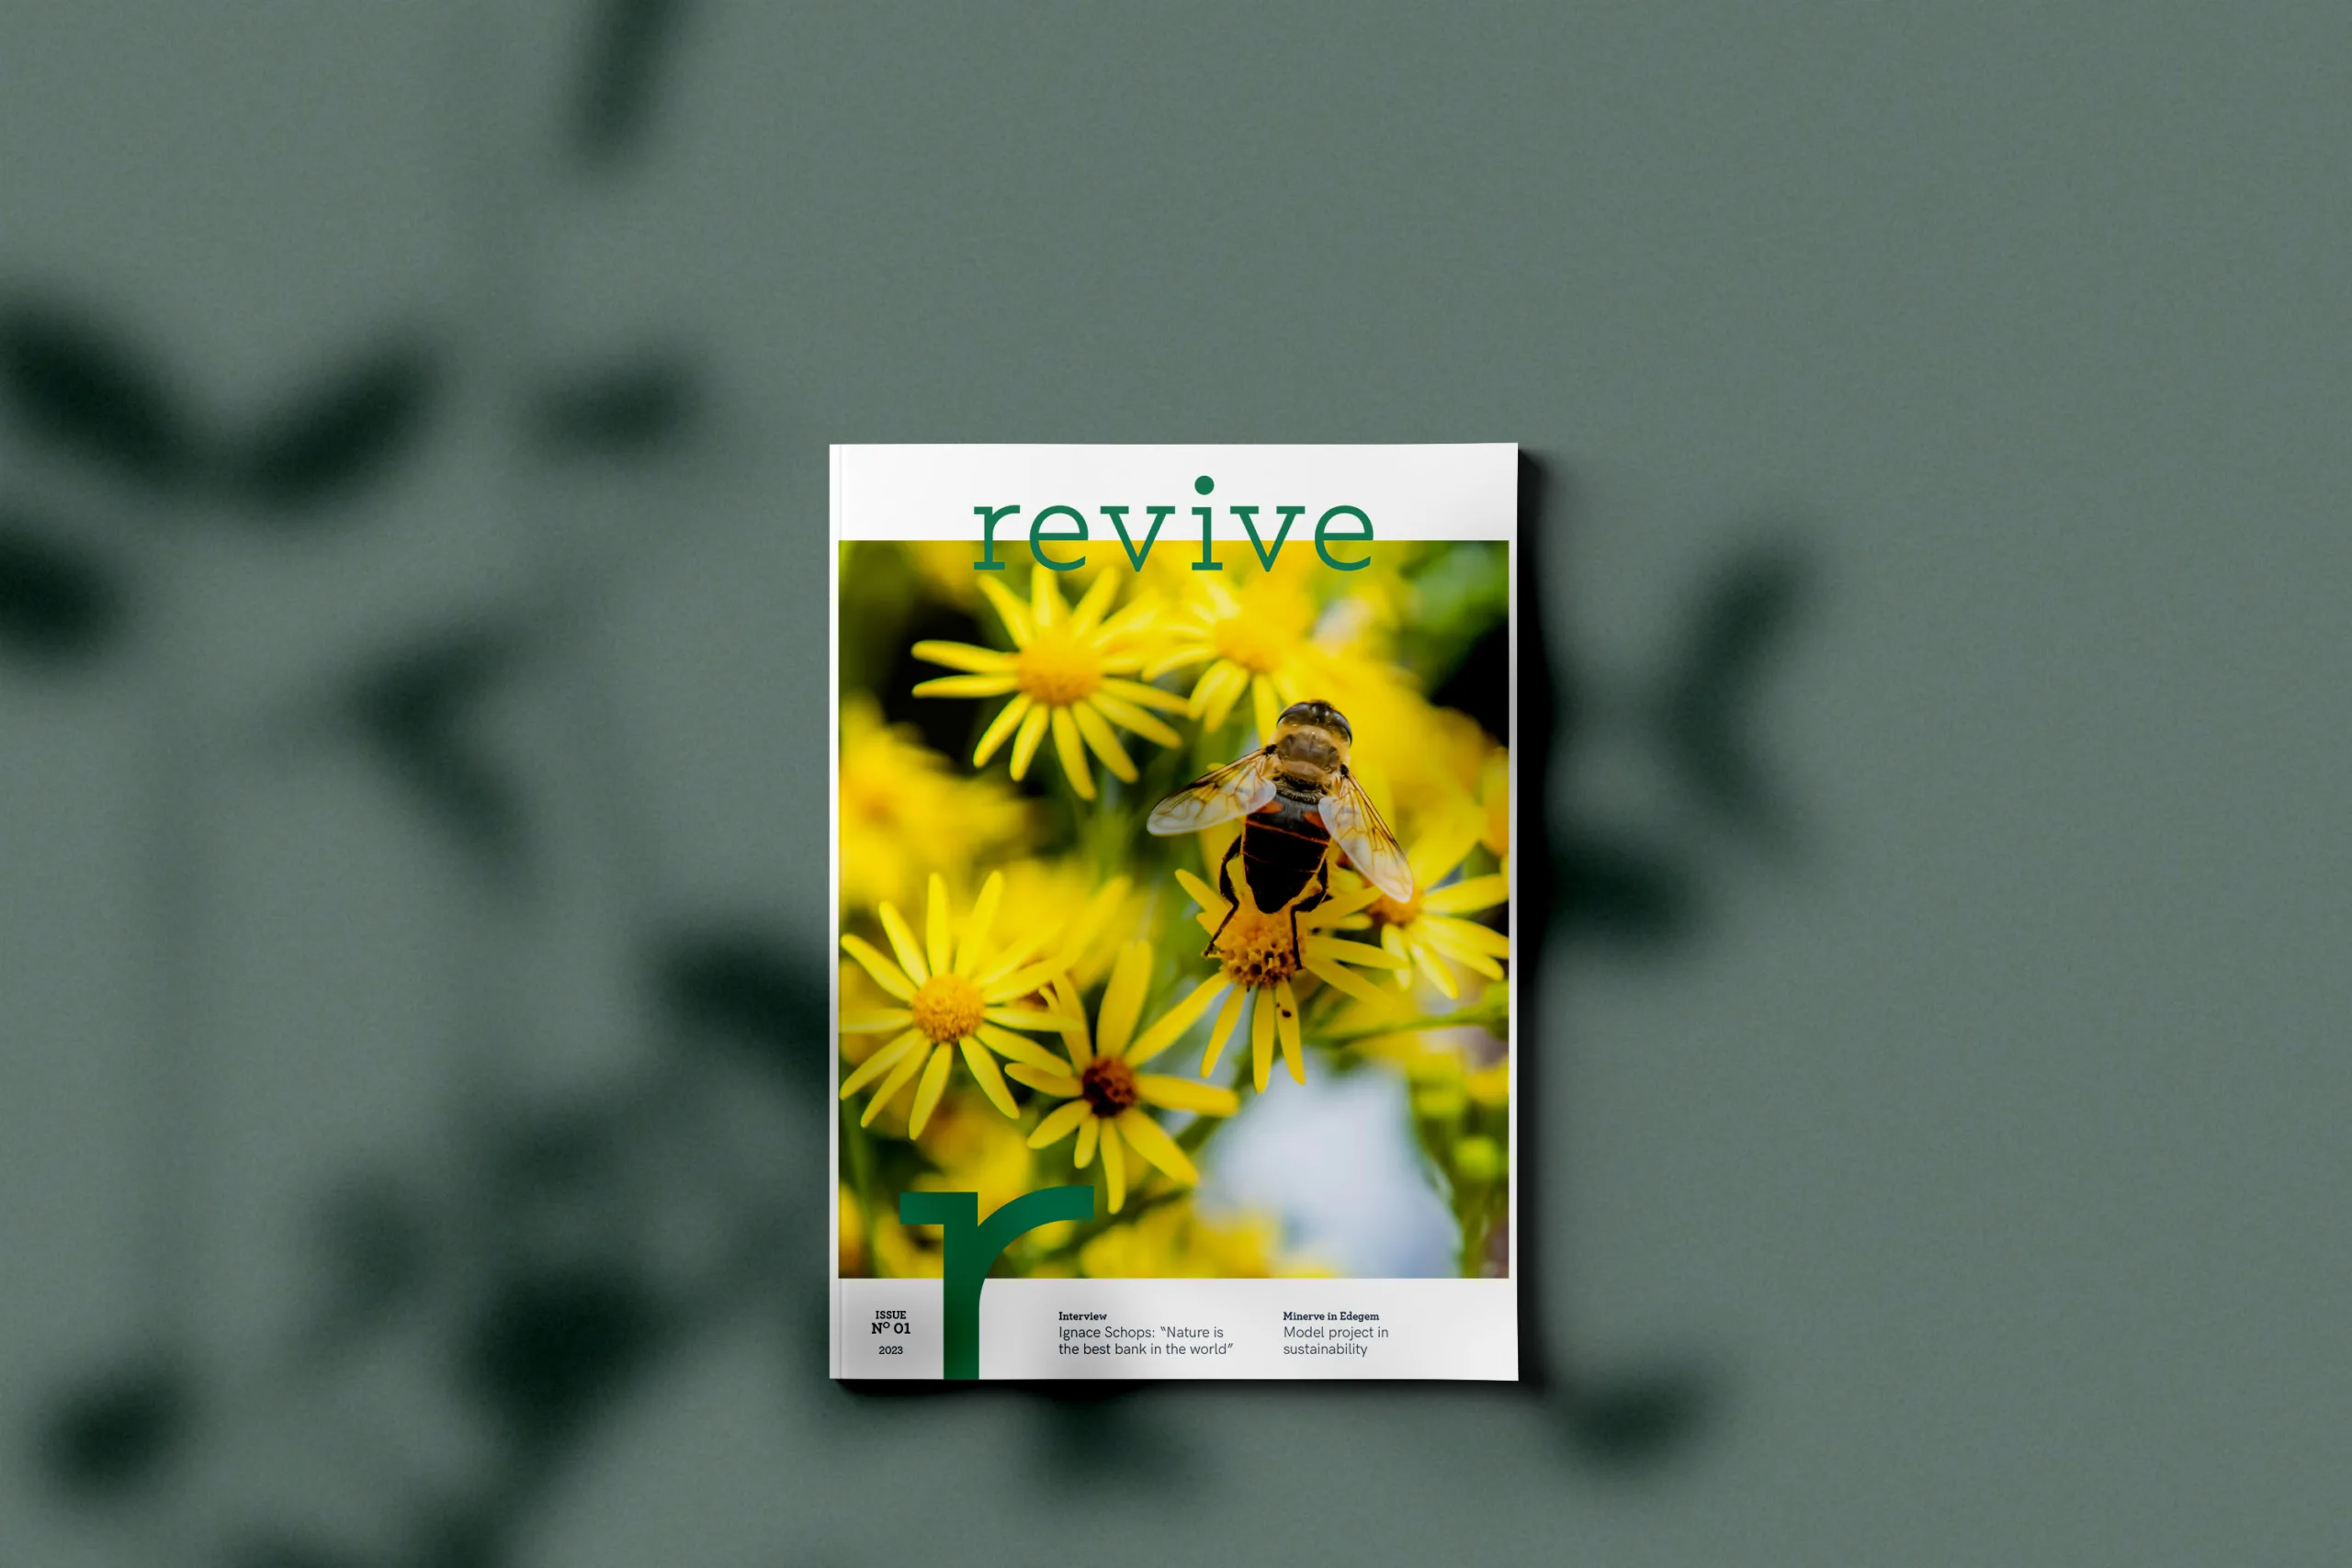 Revive magazine cover design thema biodiversiteit